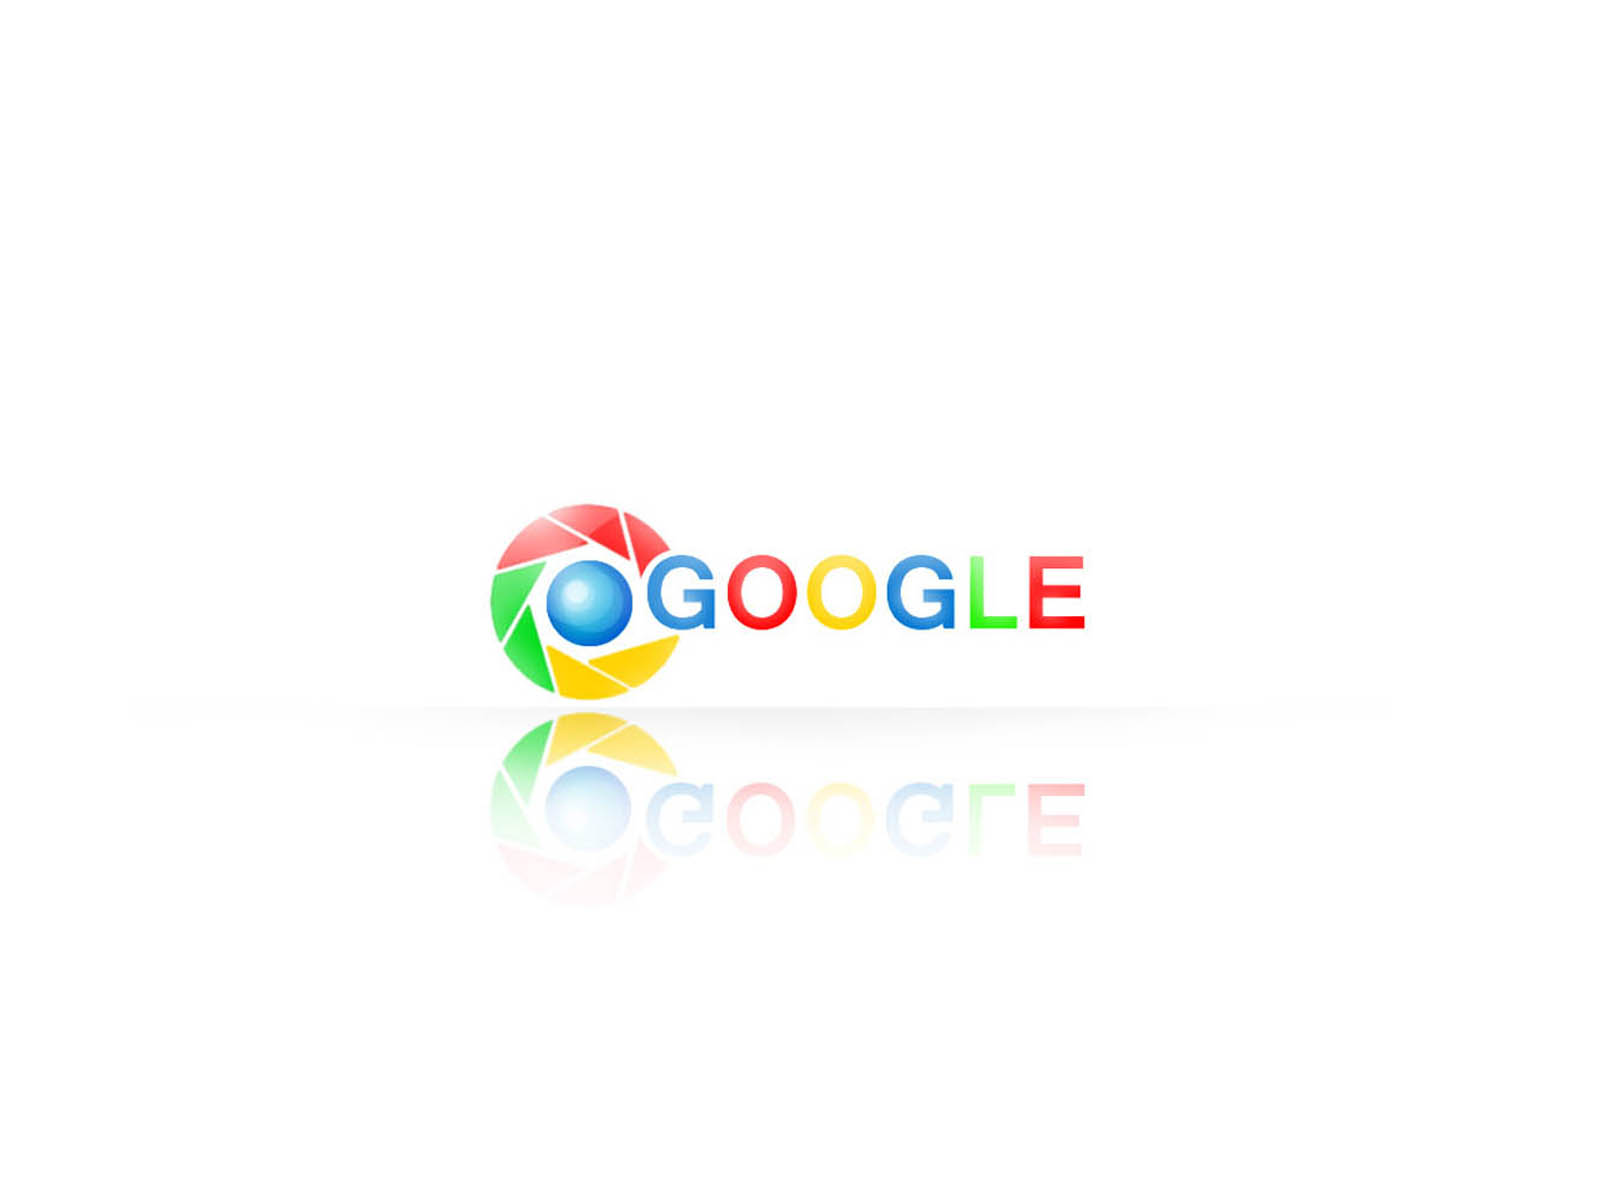  Google Desktop Wallpapers Google Desktop Backgrounds Images 1600x1200